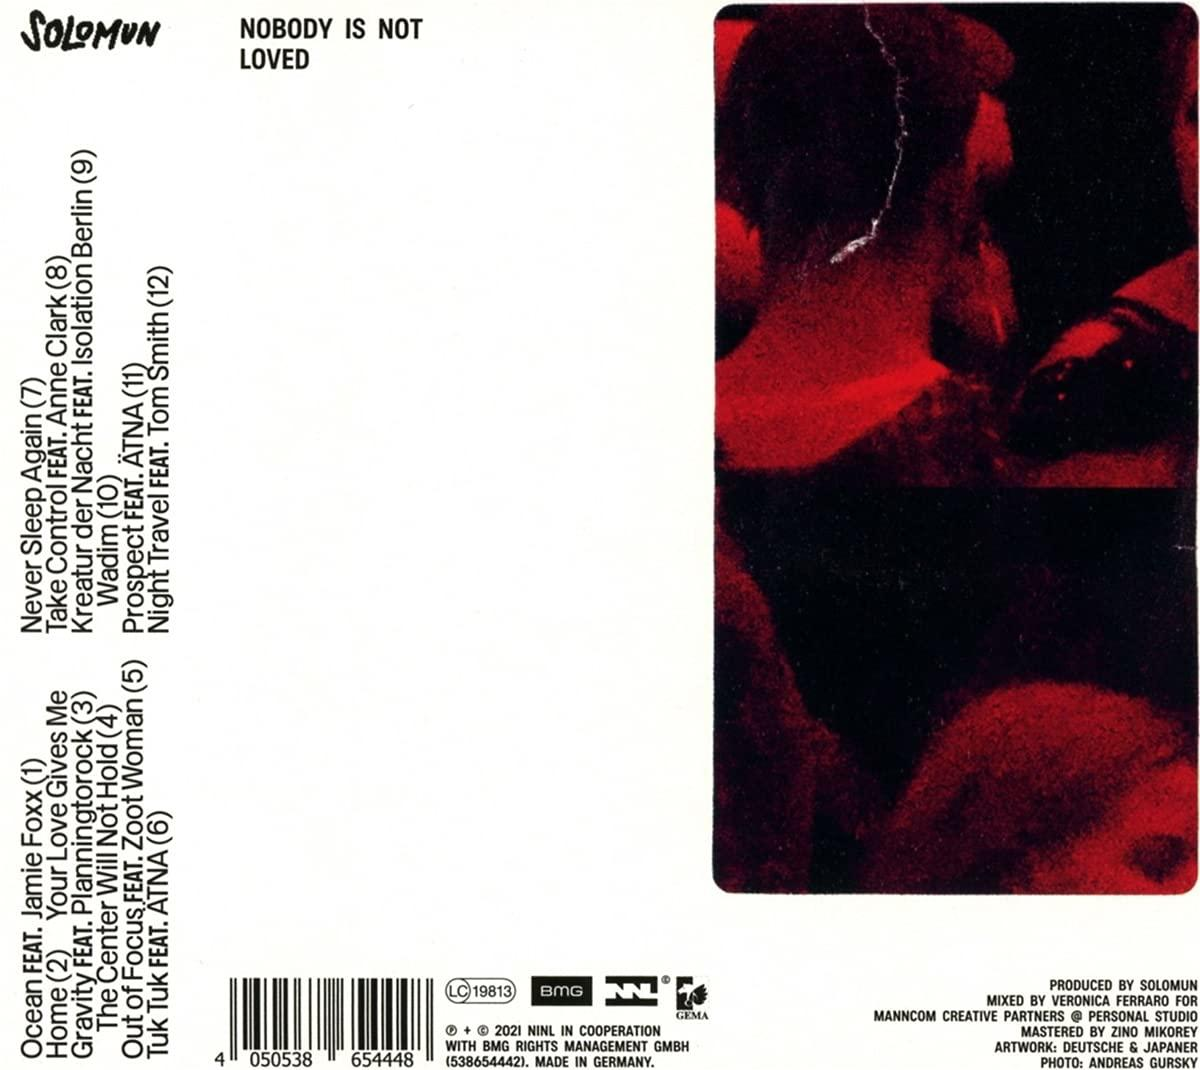 Solomun - Not Nobody Is - Loved (CD)